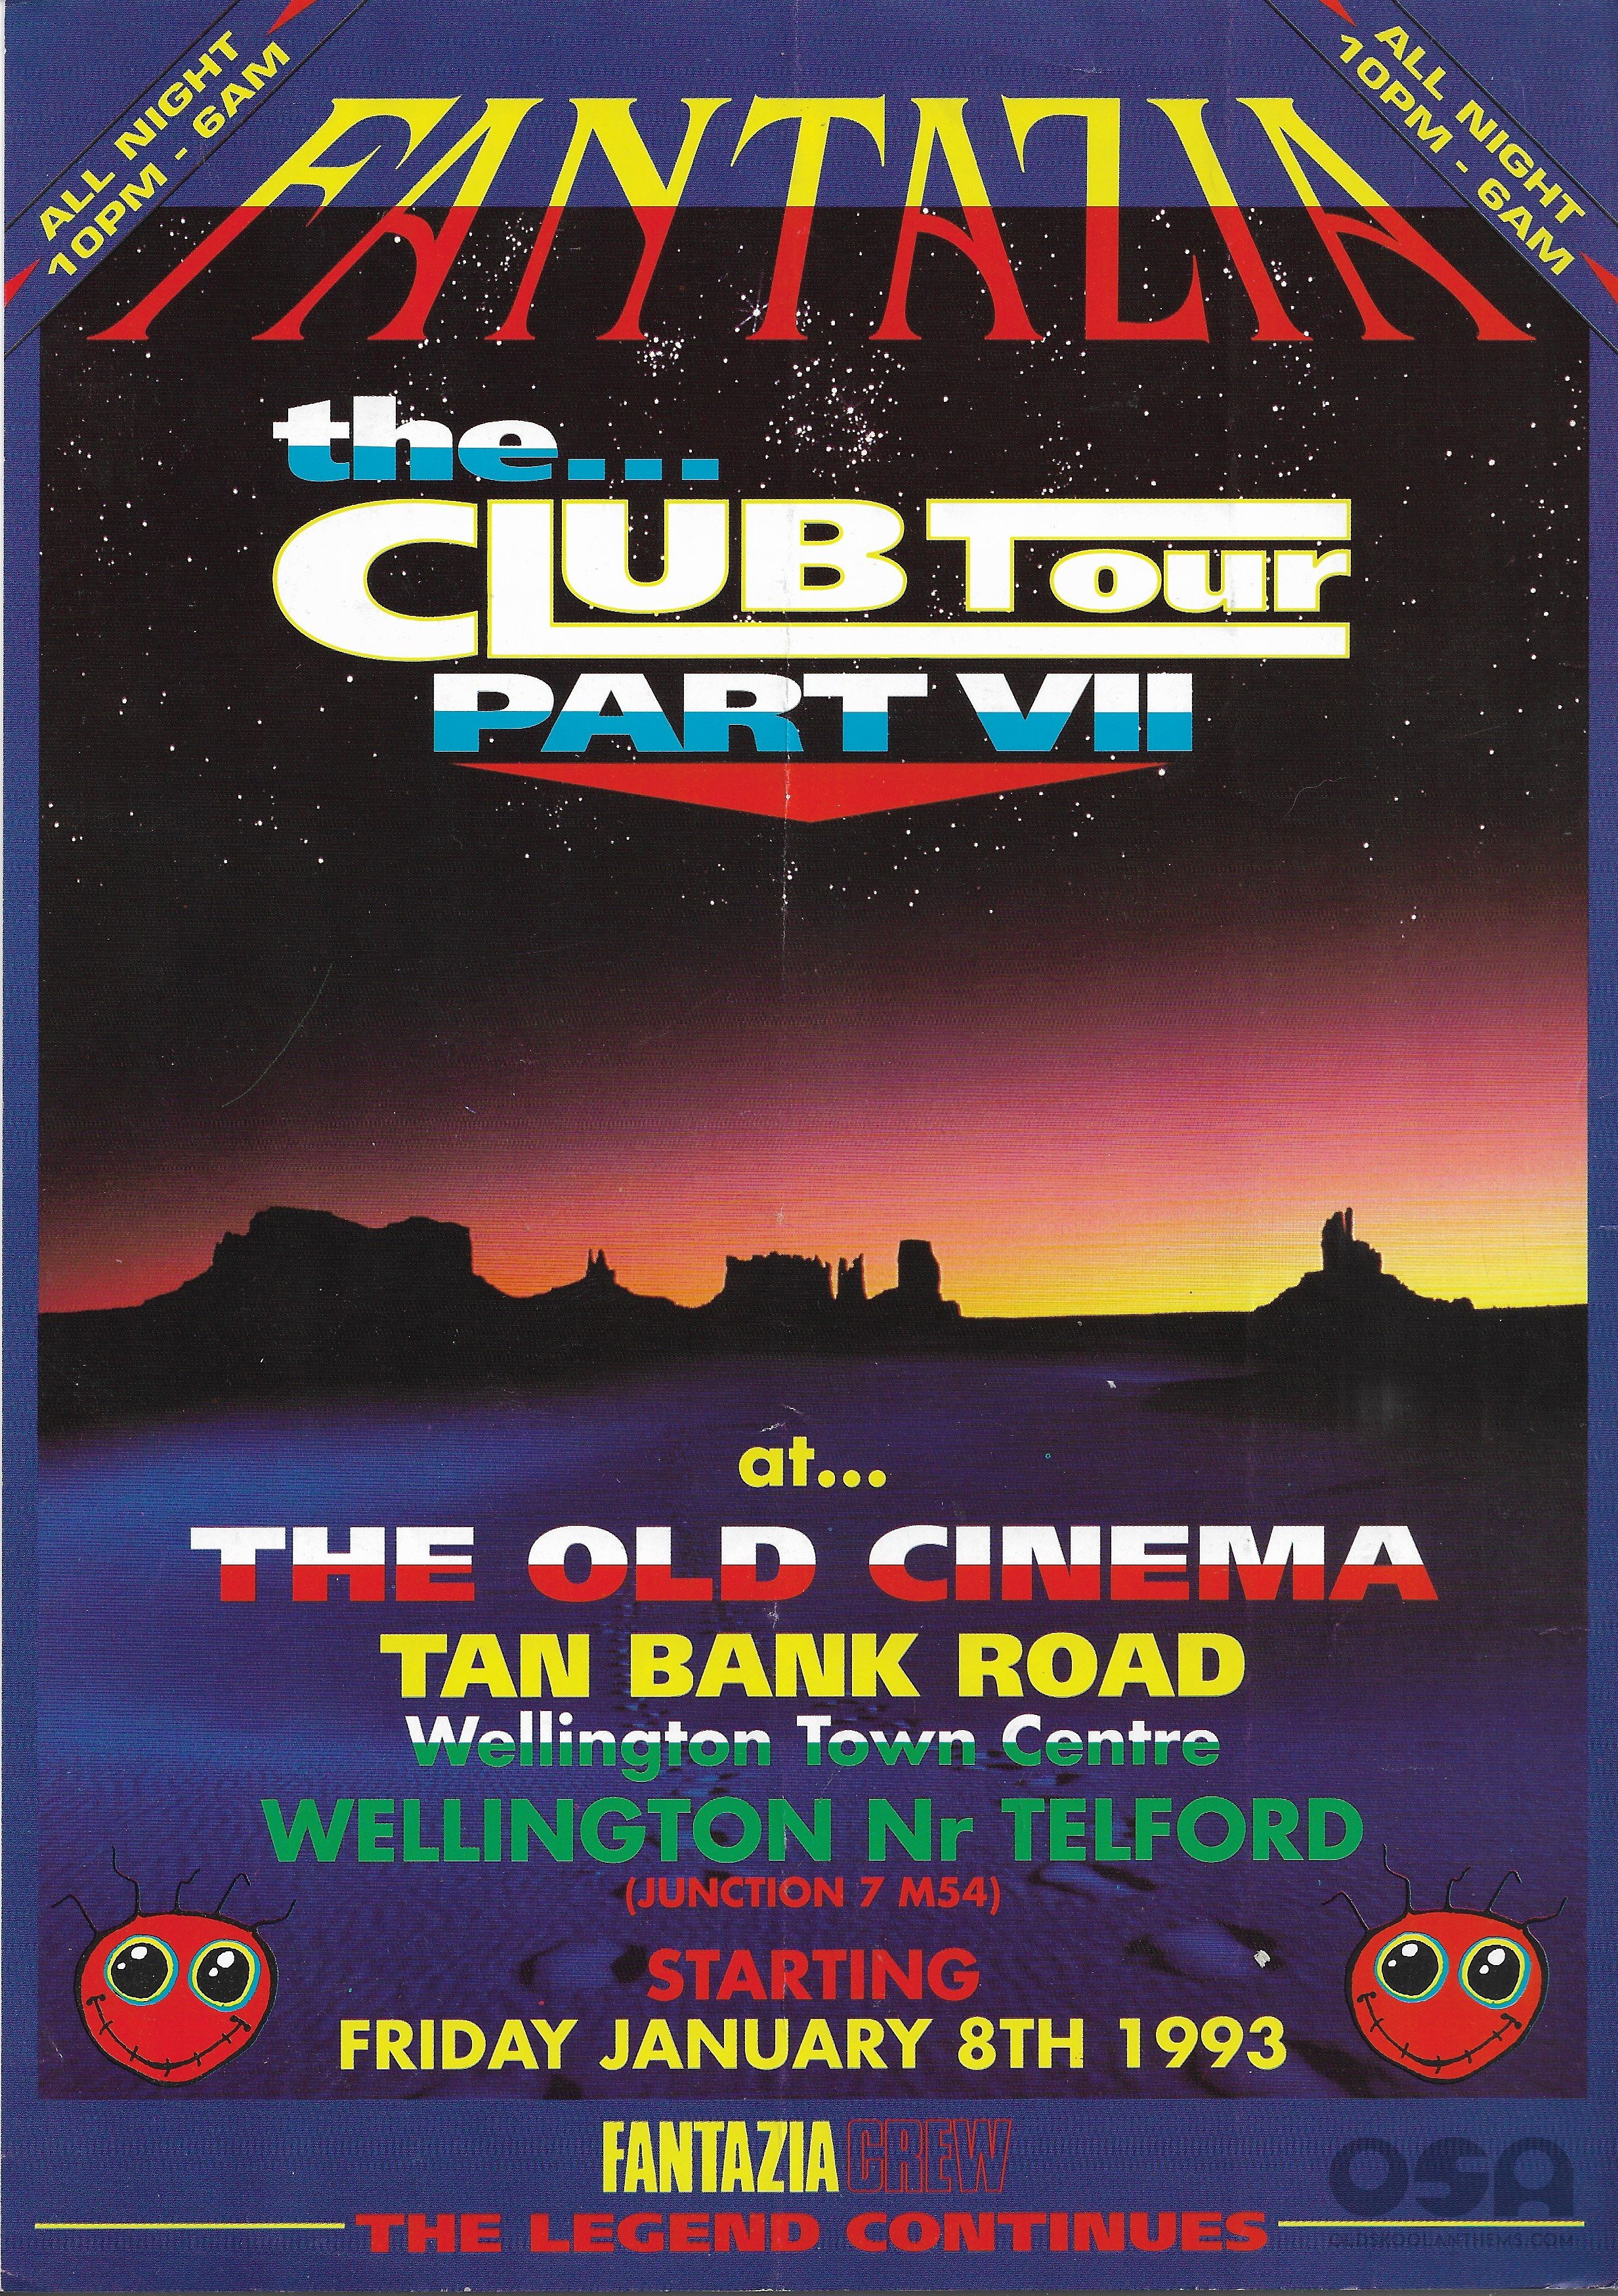 Fantazia Club Tour 7 @ The Old Cinema - Telford  - 8th January 1993 - A .jpg